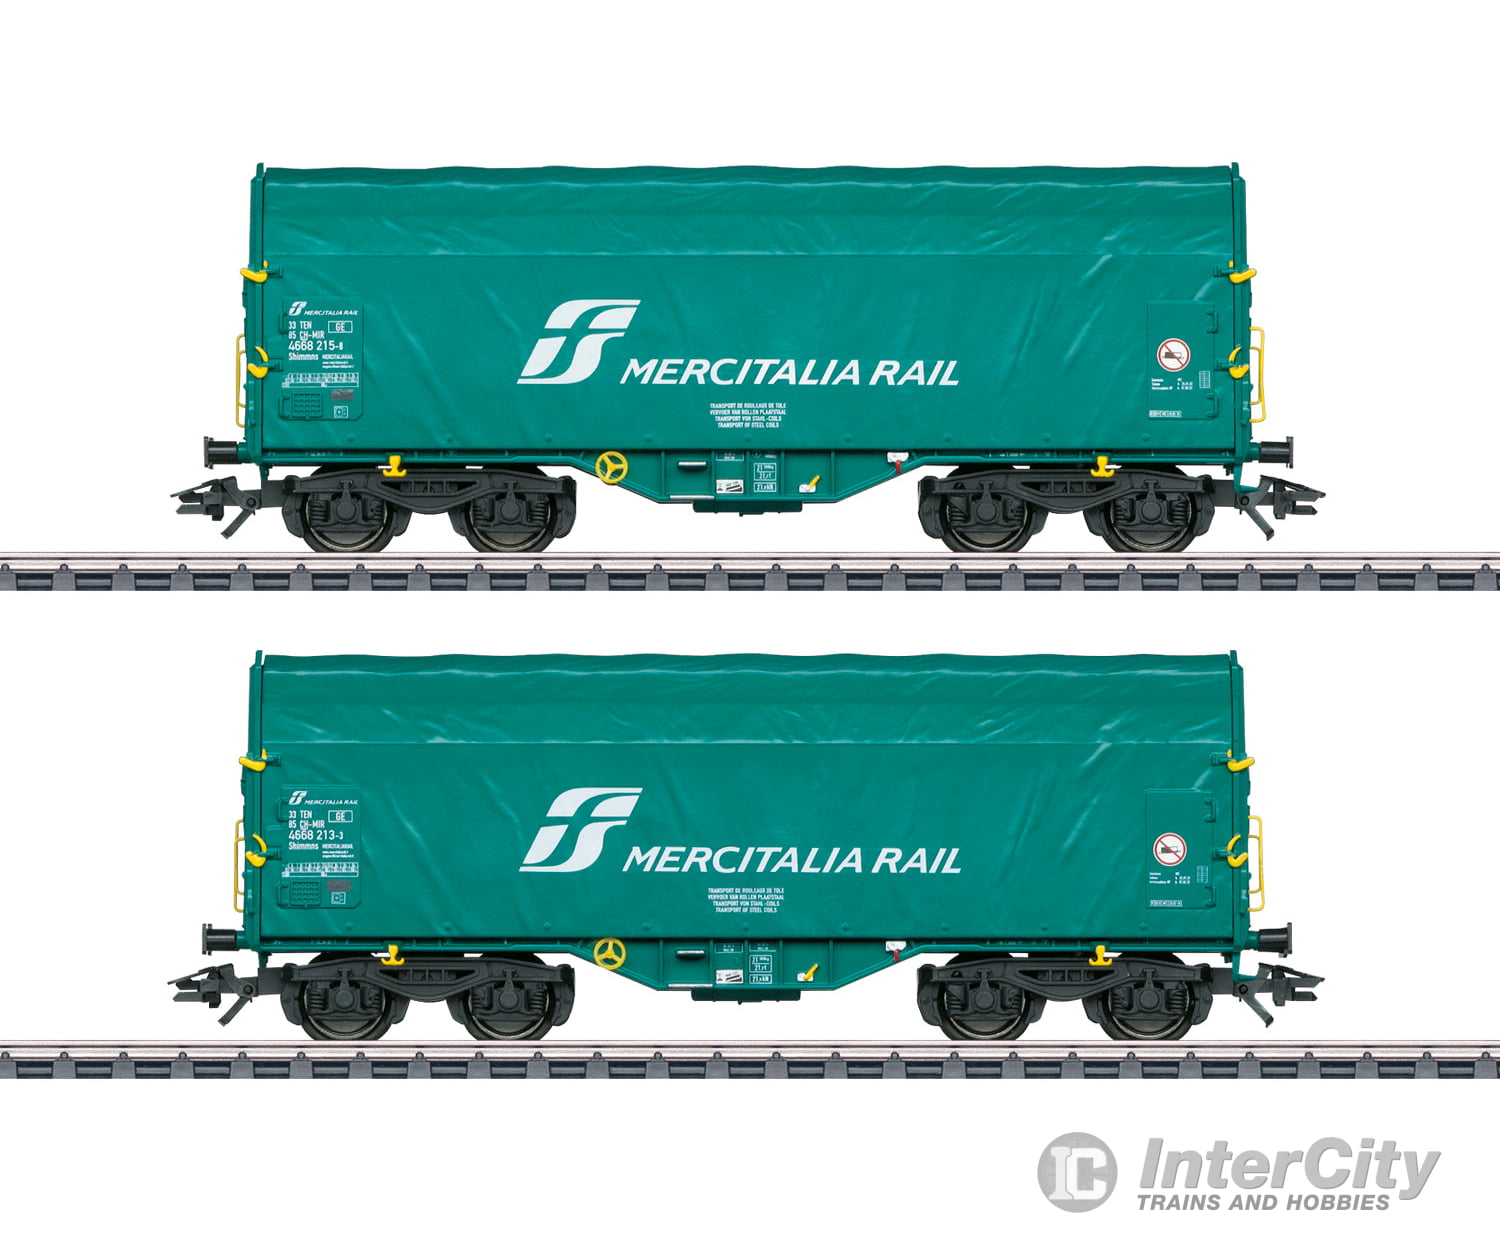 Marklin 47228 Ho Mercitalia Rail Sliding Tarp Car Set European Freight Cars